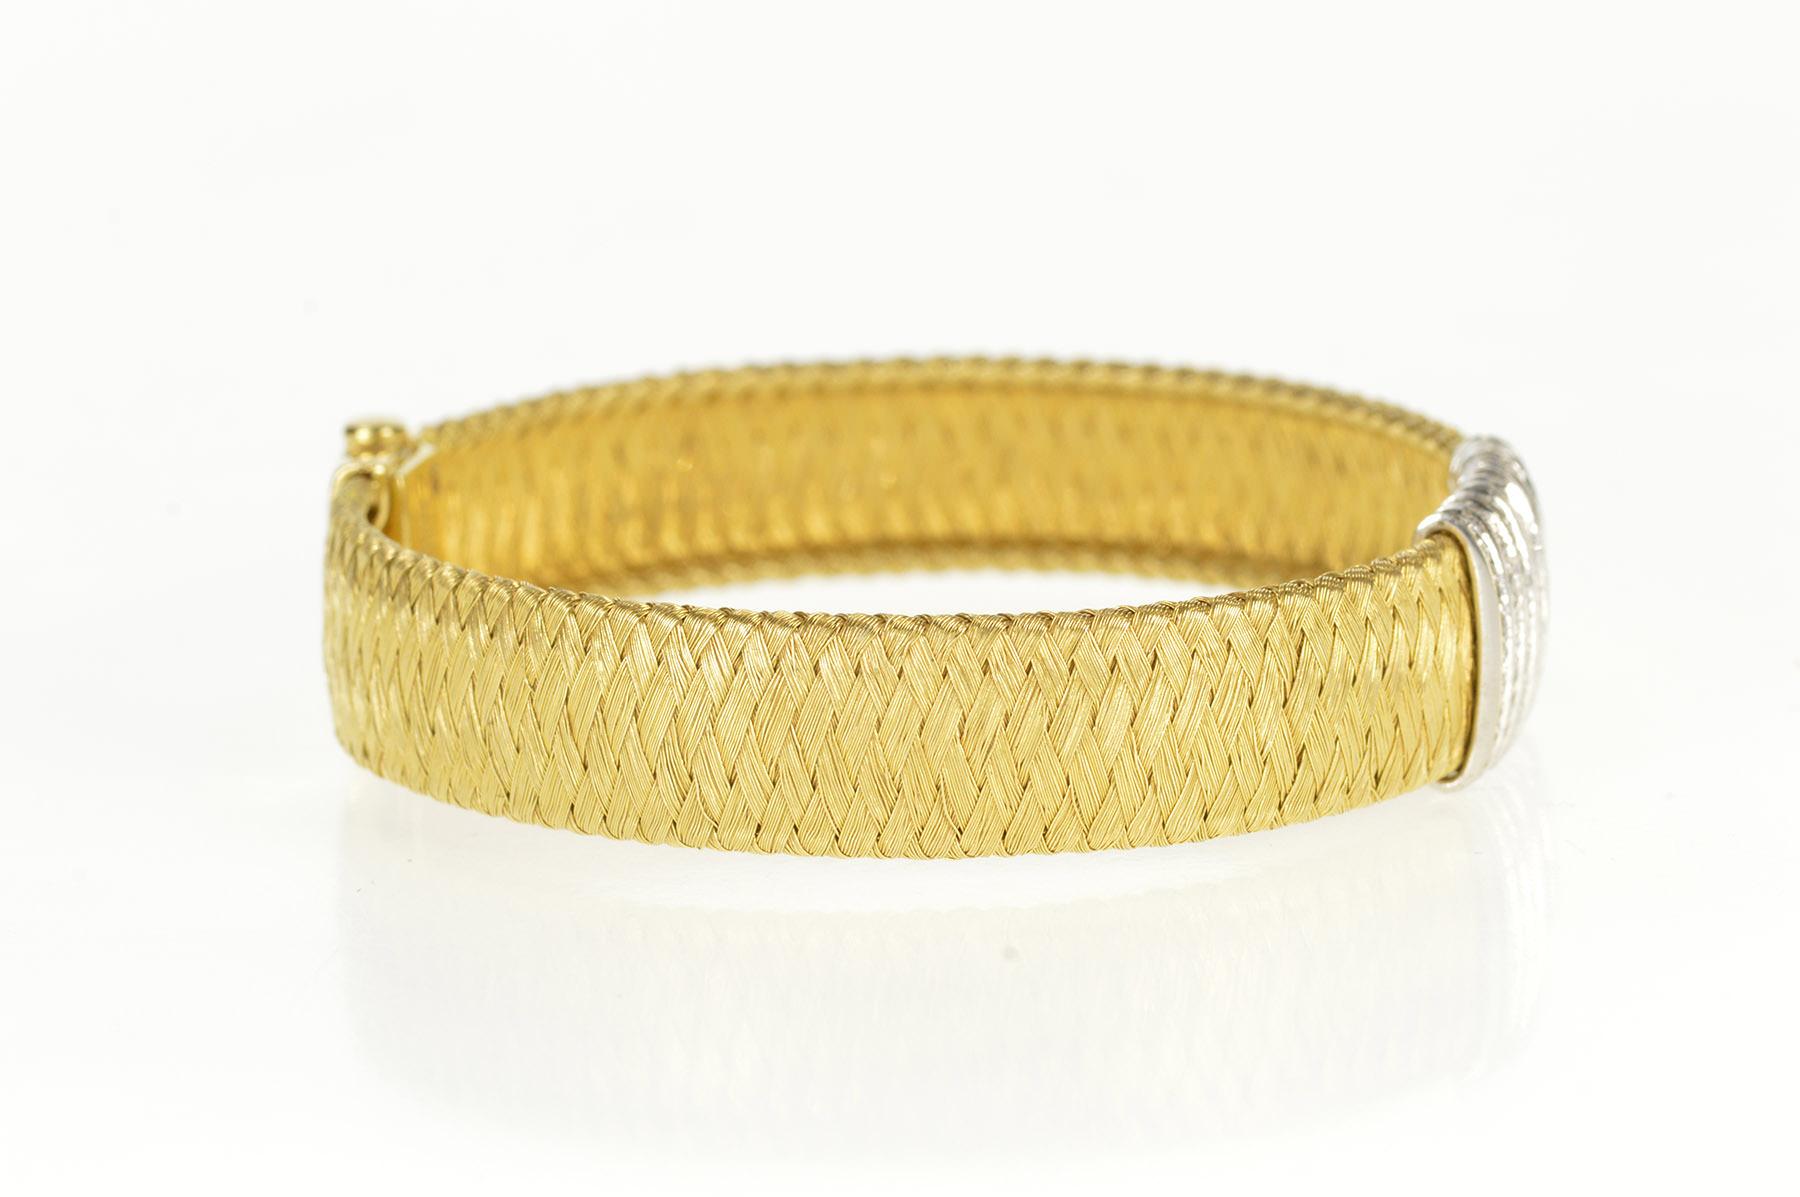 Ladies 18k yellow gold bracelet with almost 100 round cut brilliant diamonds. Measuring 7